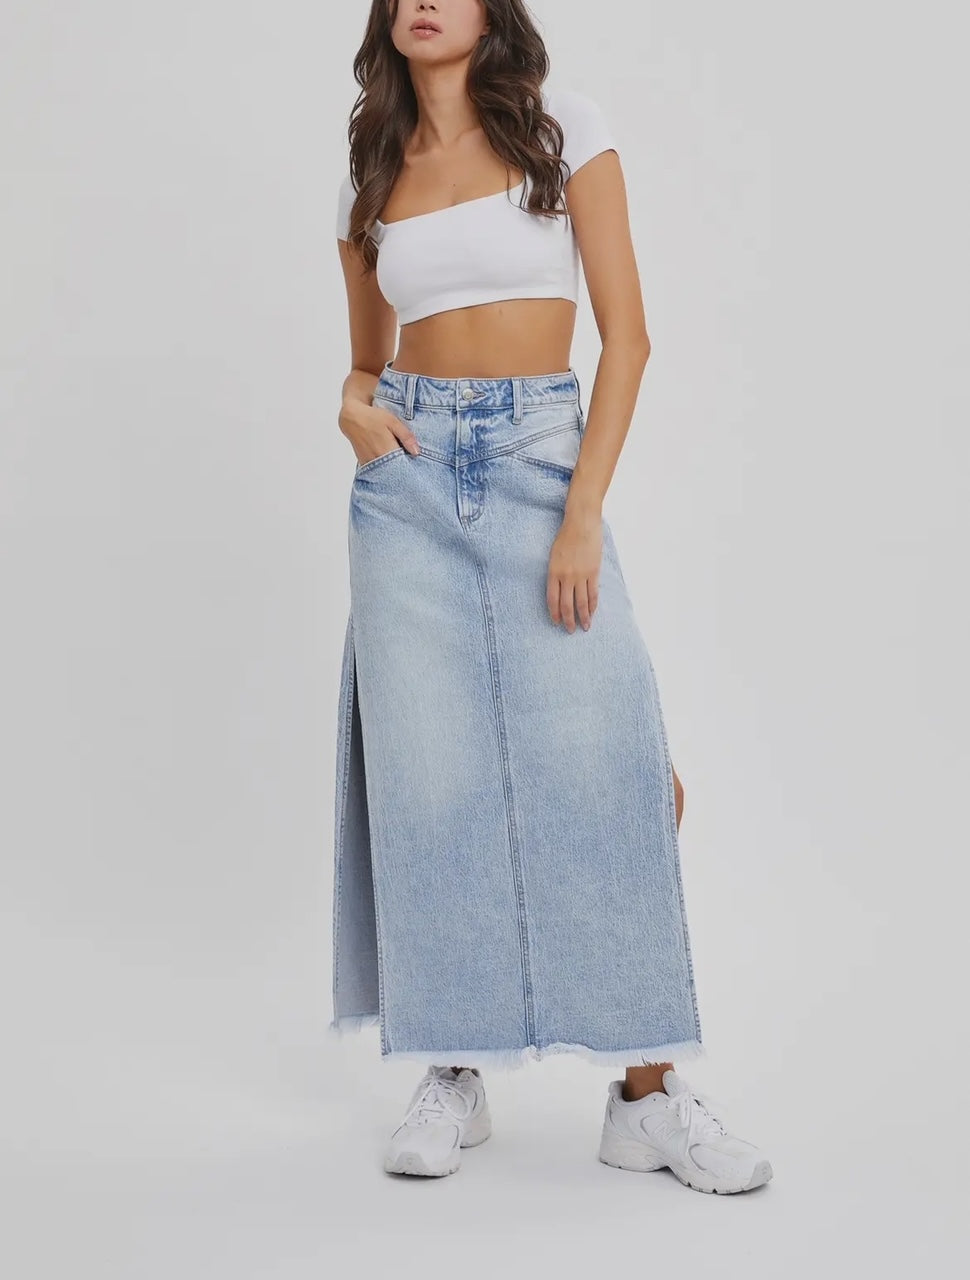 Denim Skirt - Size Medium